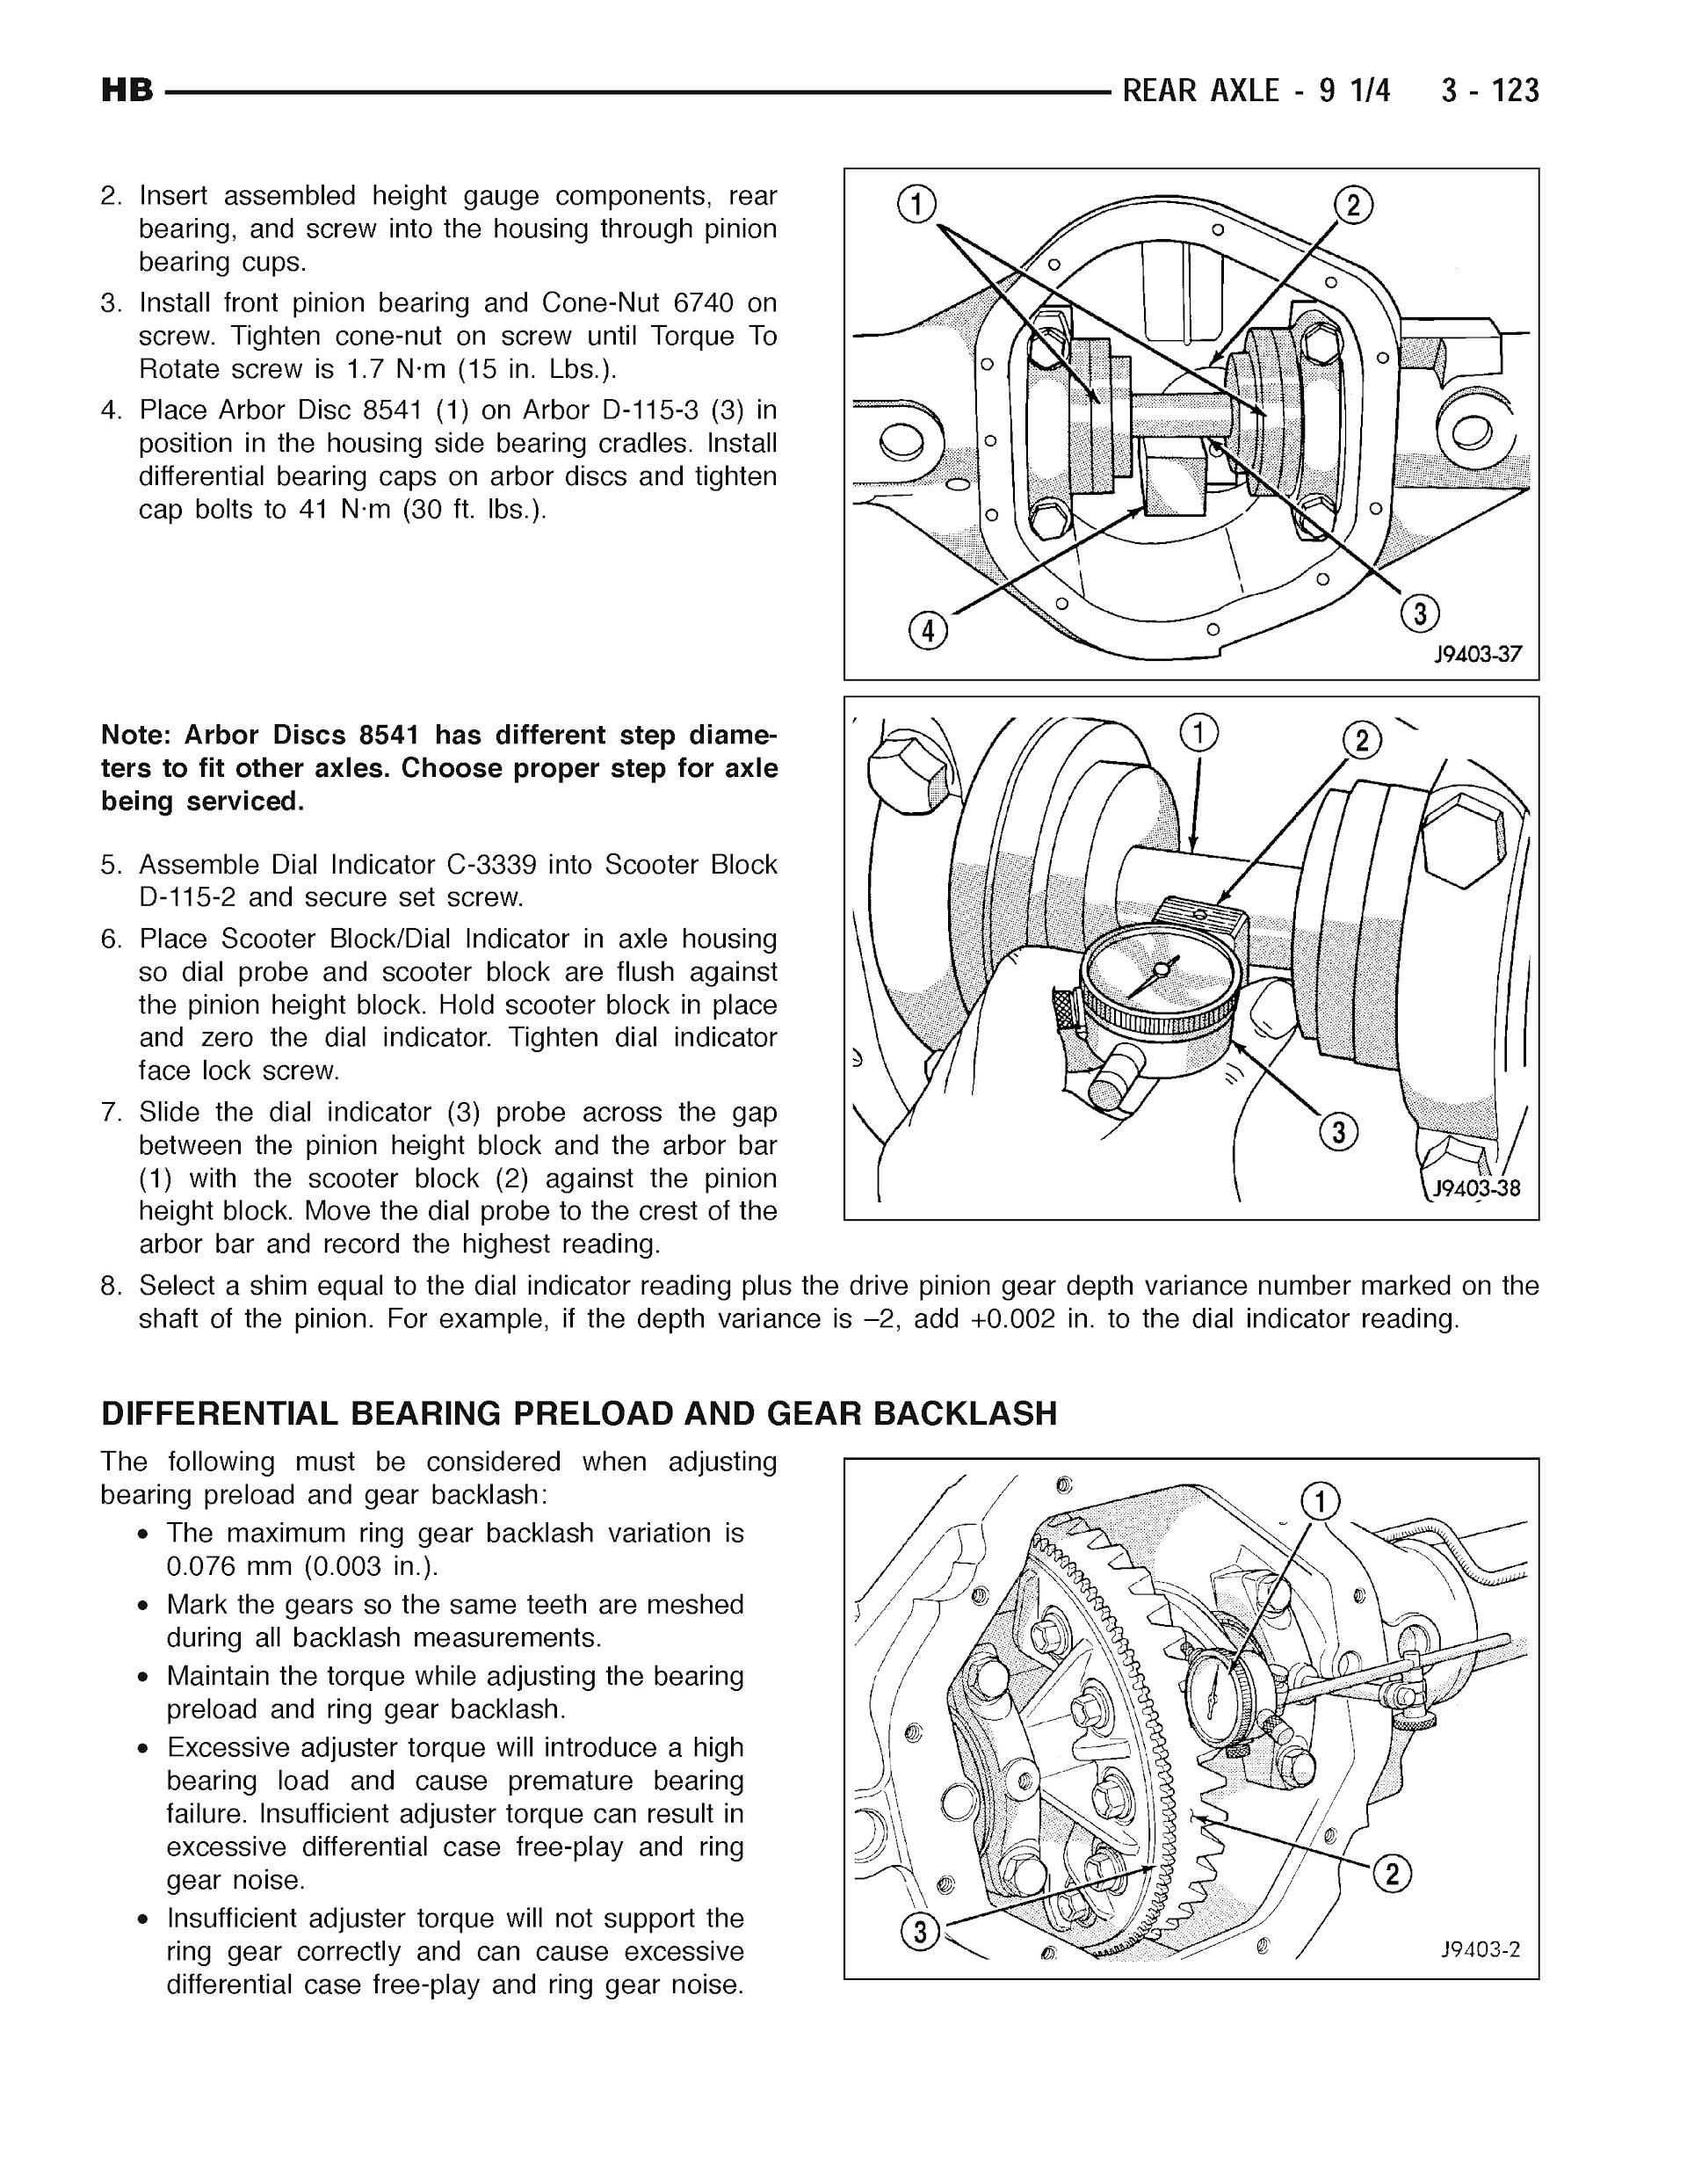 2004-2006 Dodge Durango Repair Manual, Rear Axle